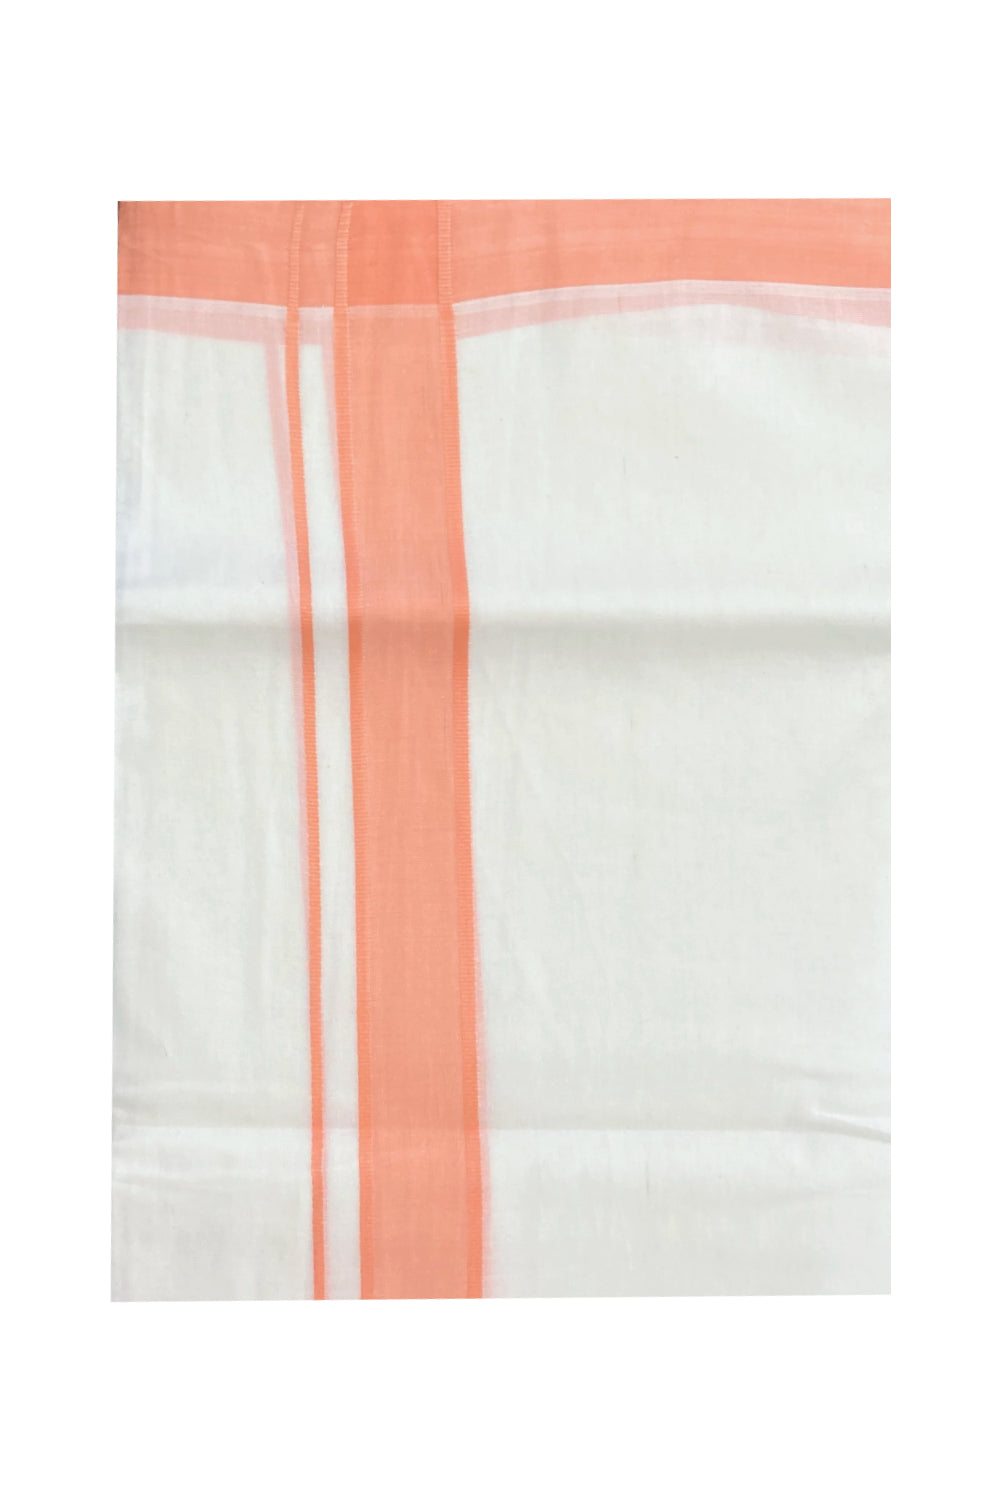 Pure White Cotton Double Mundu with Orange Border (South Indian Dhoti)